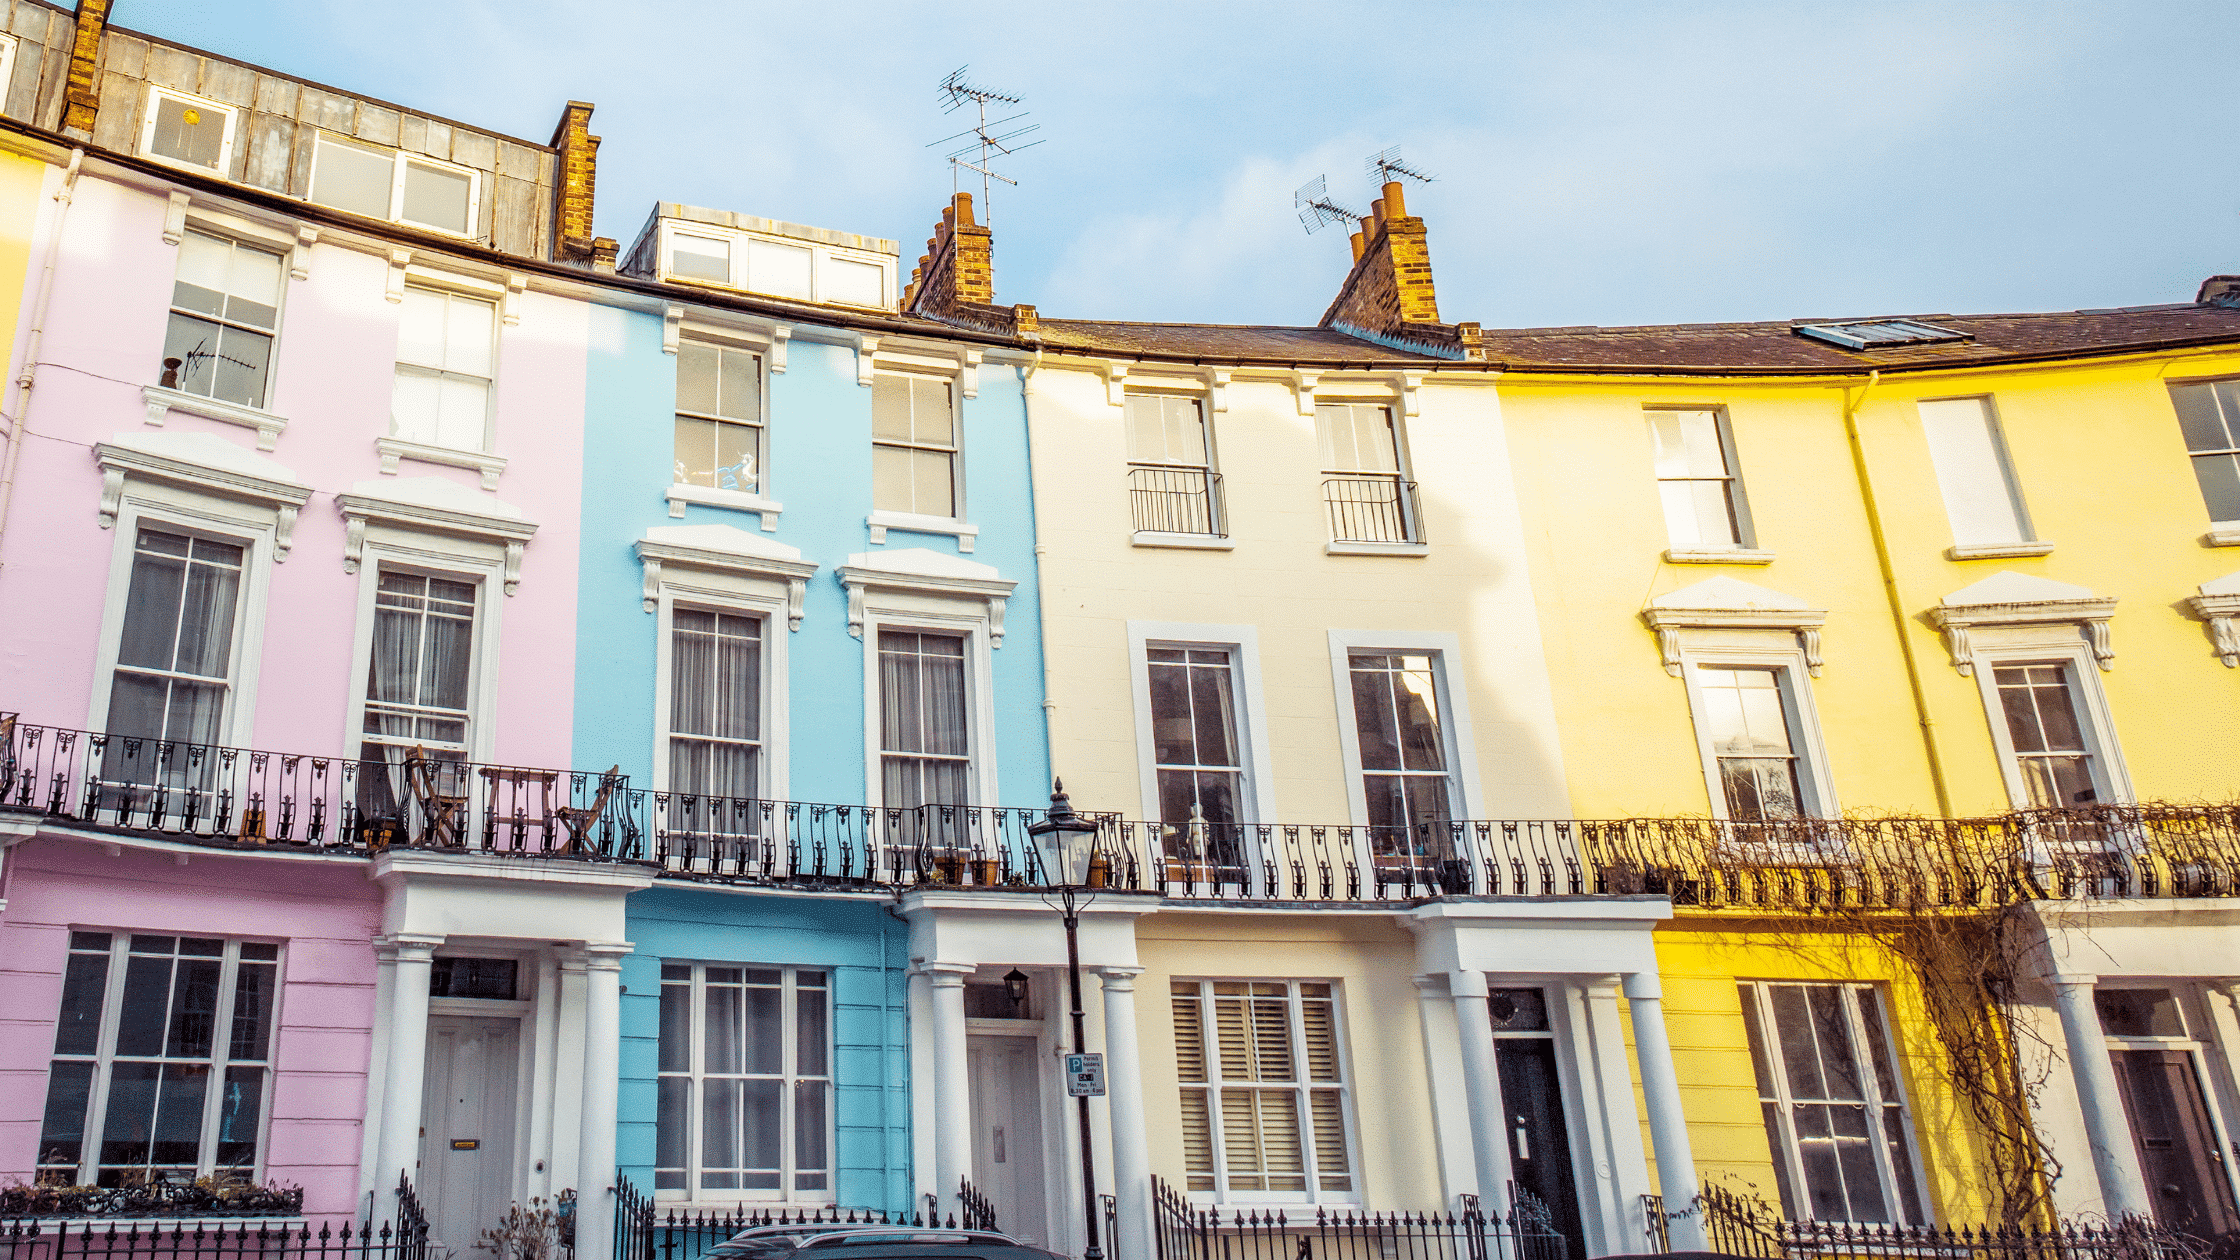 Row of colourful terrace houses